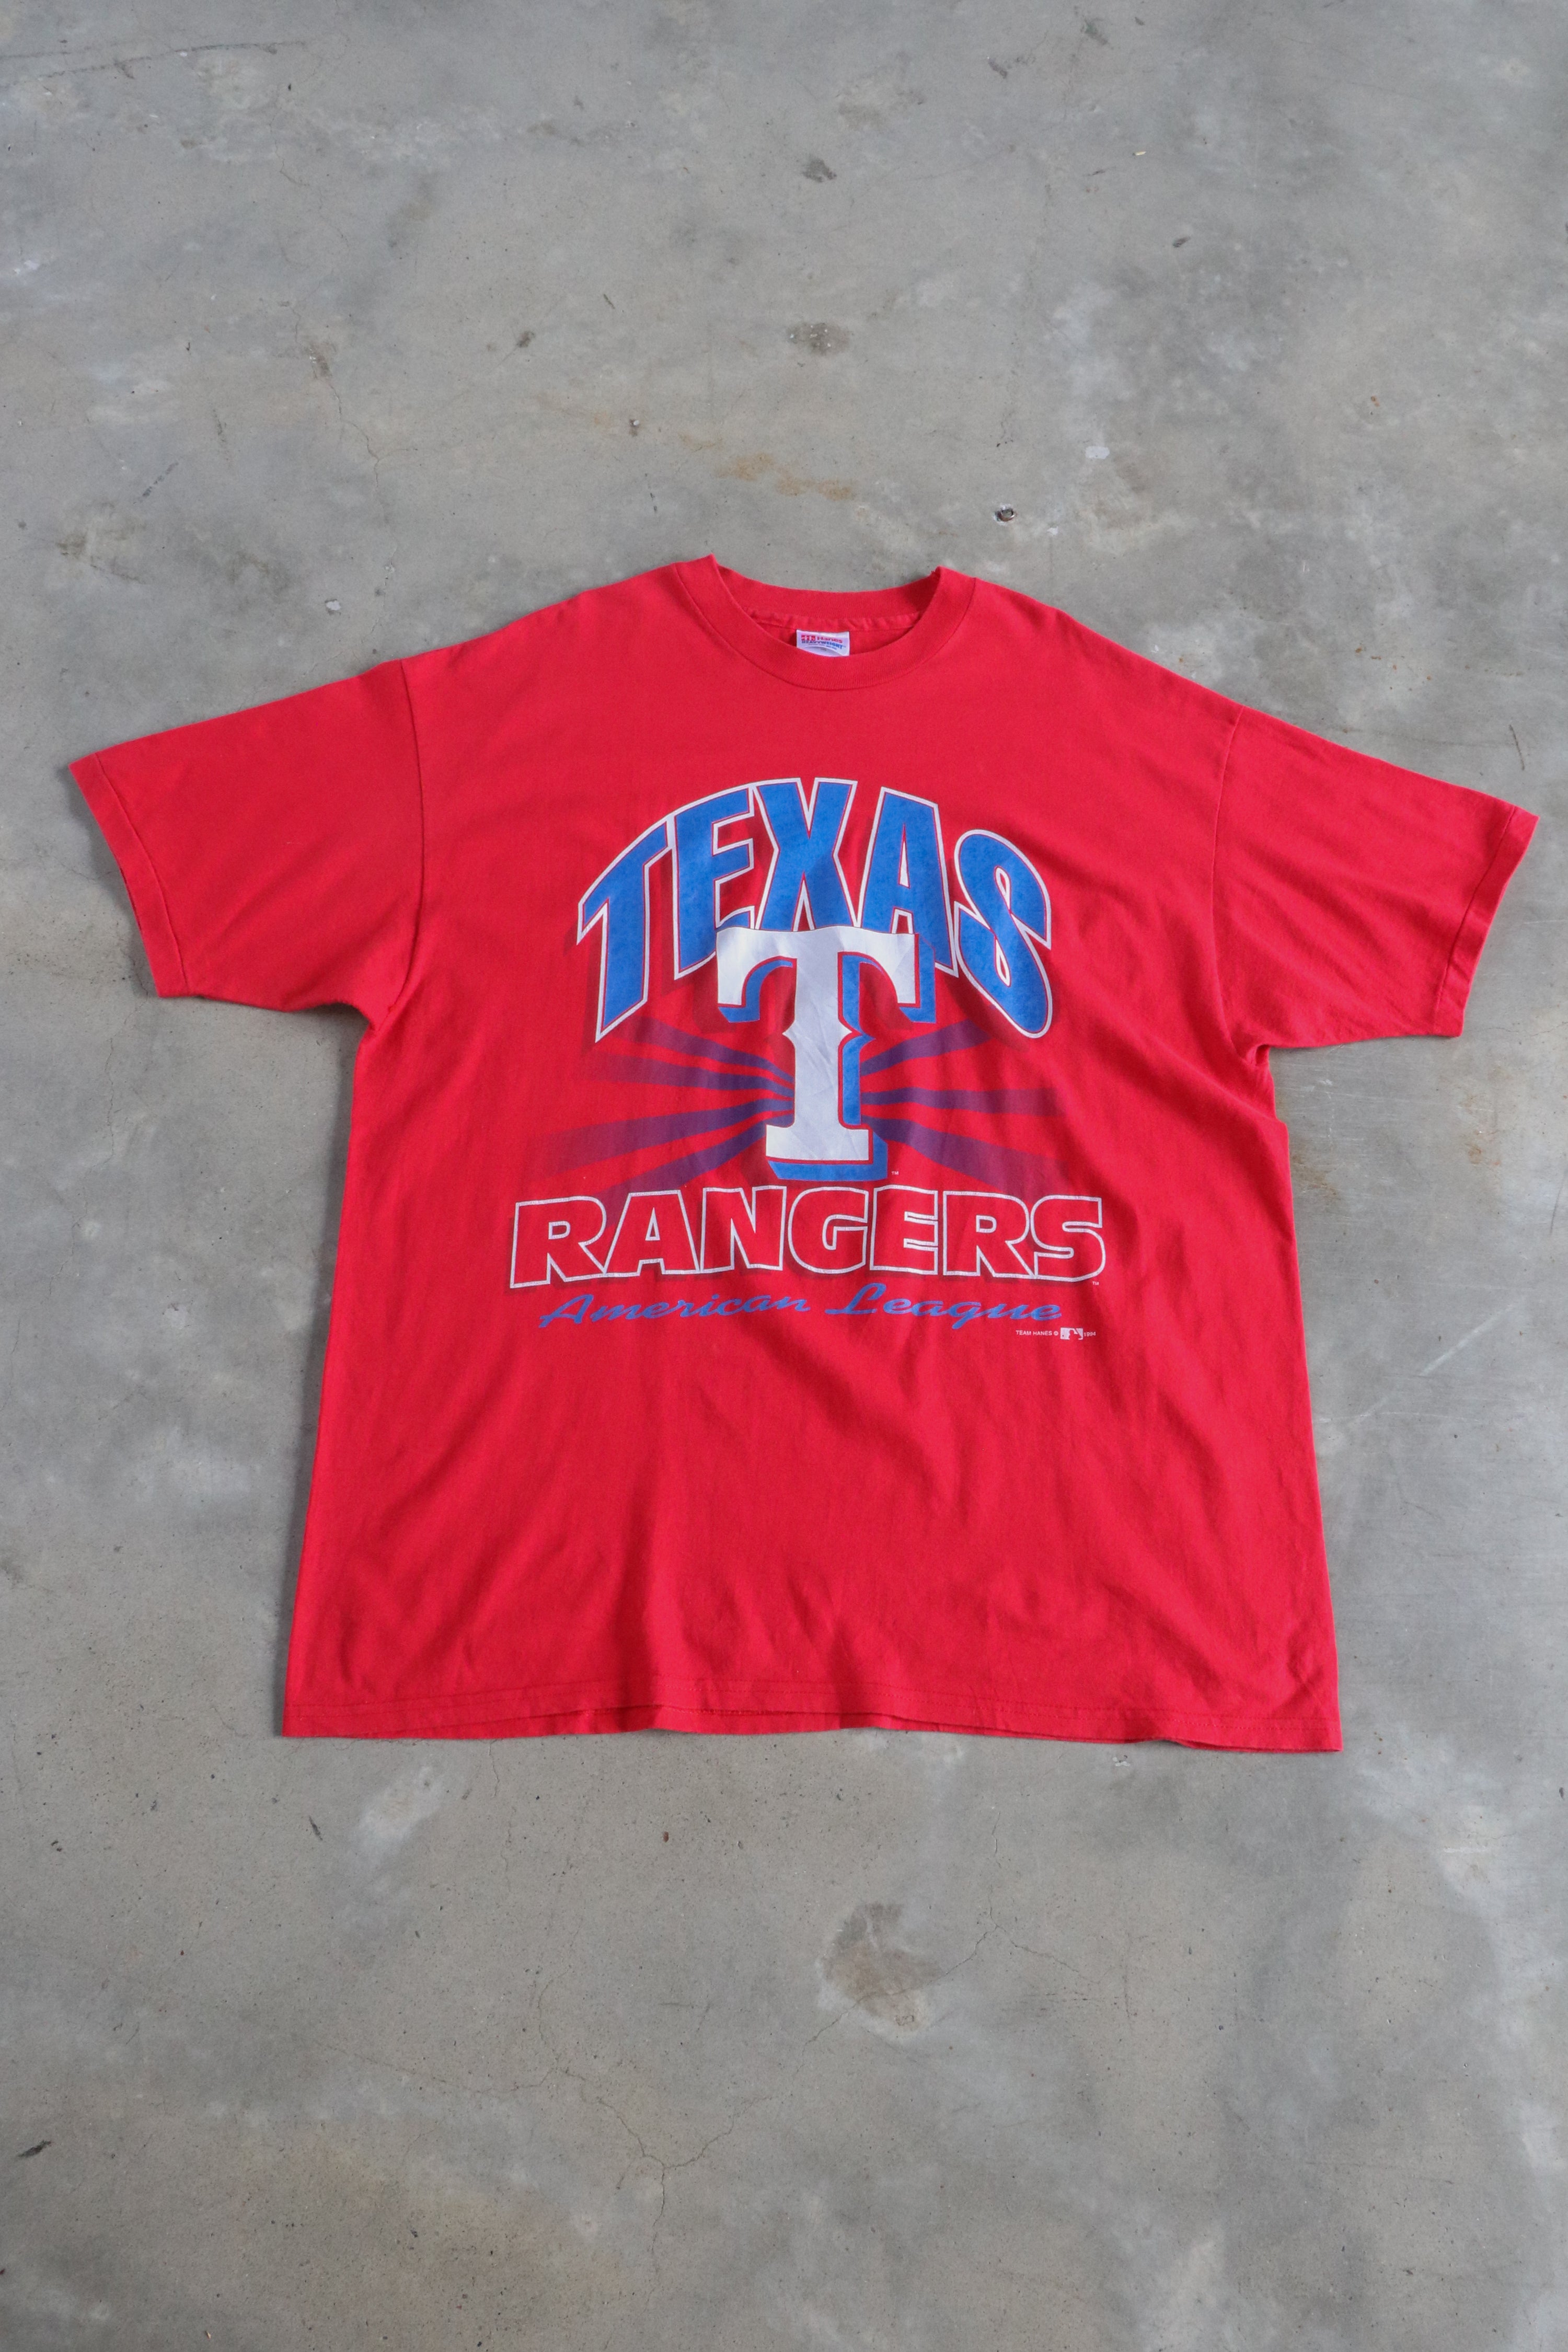 Vintage 1994 MLB Texas Rangers Tee XXL